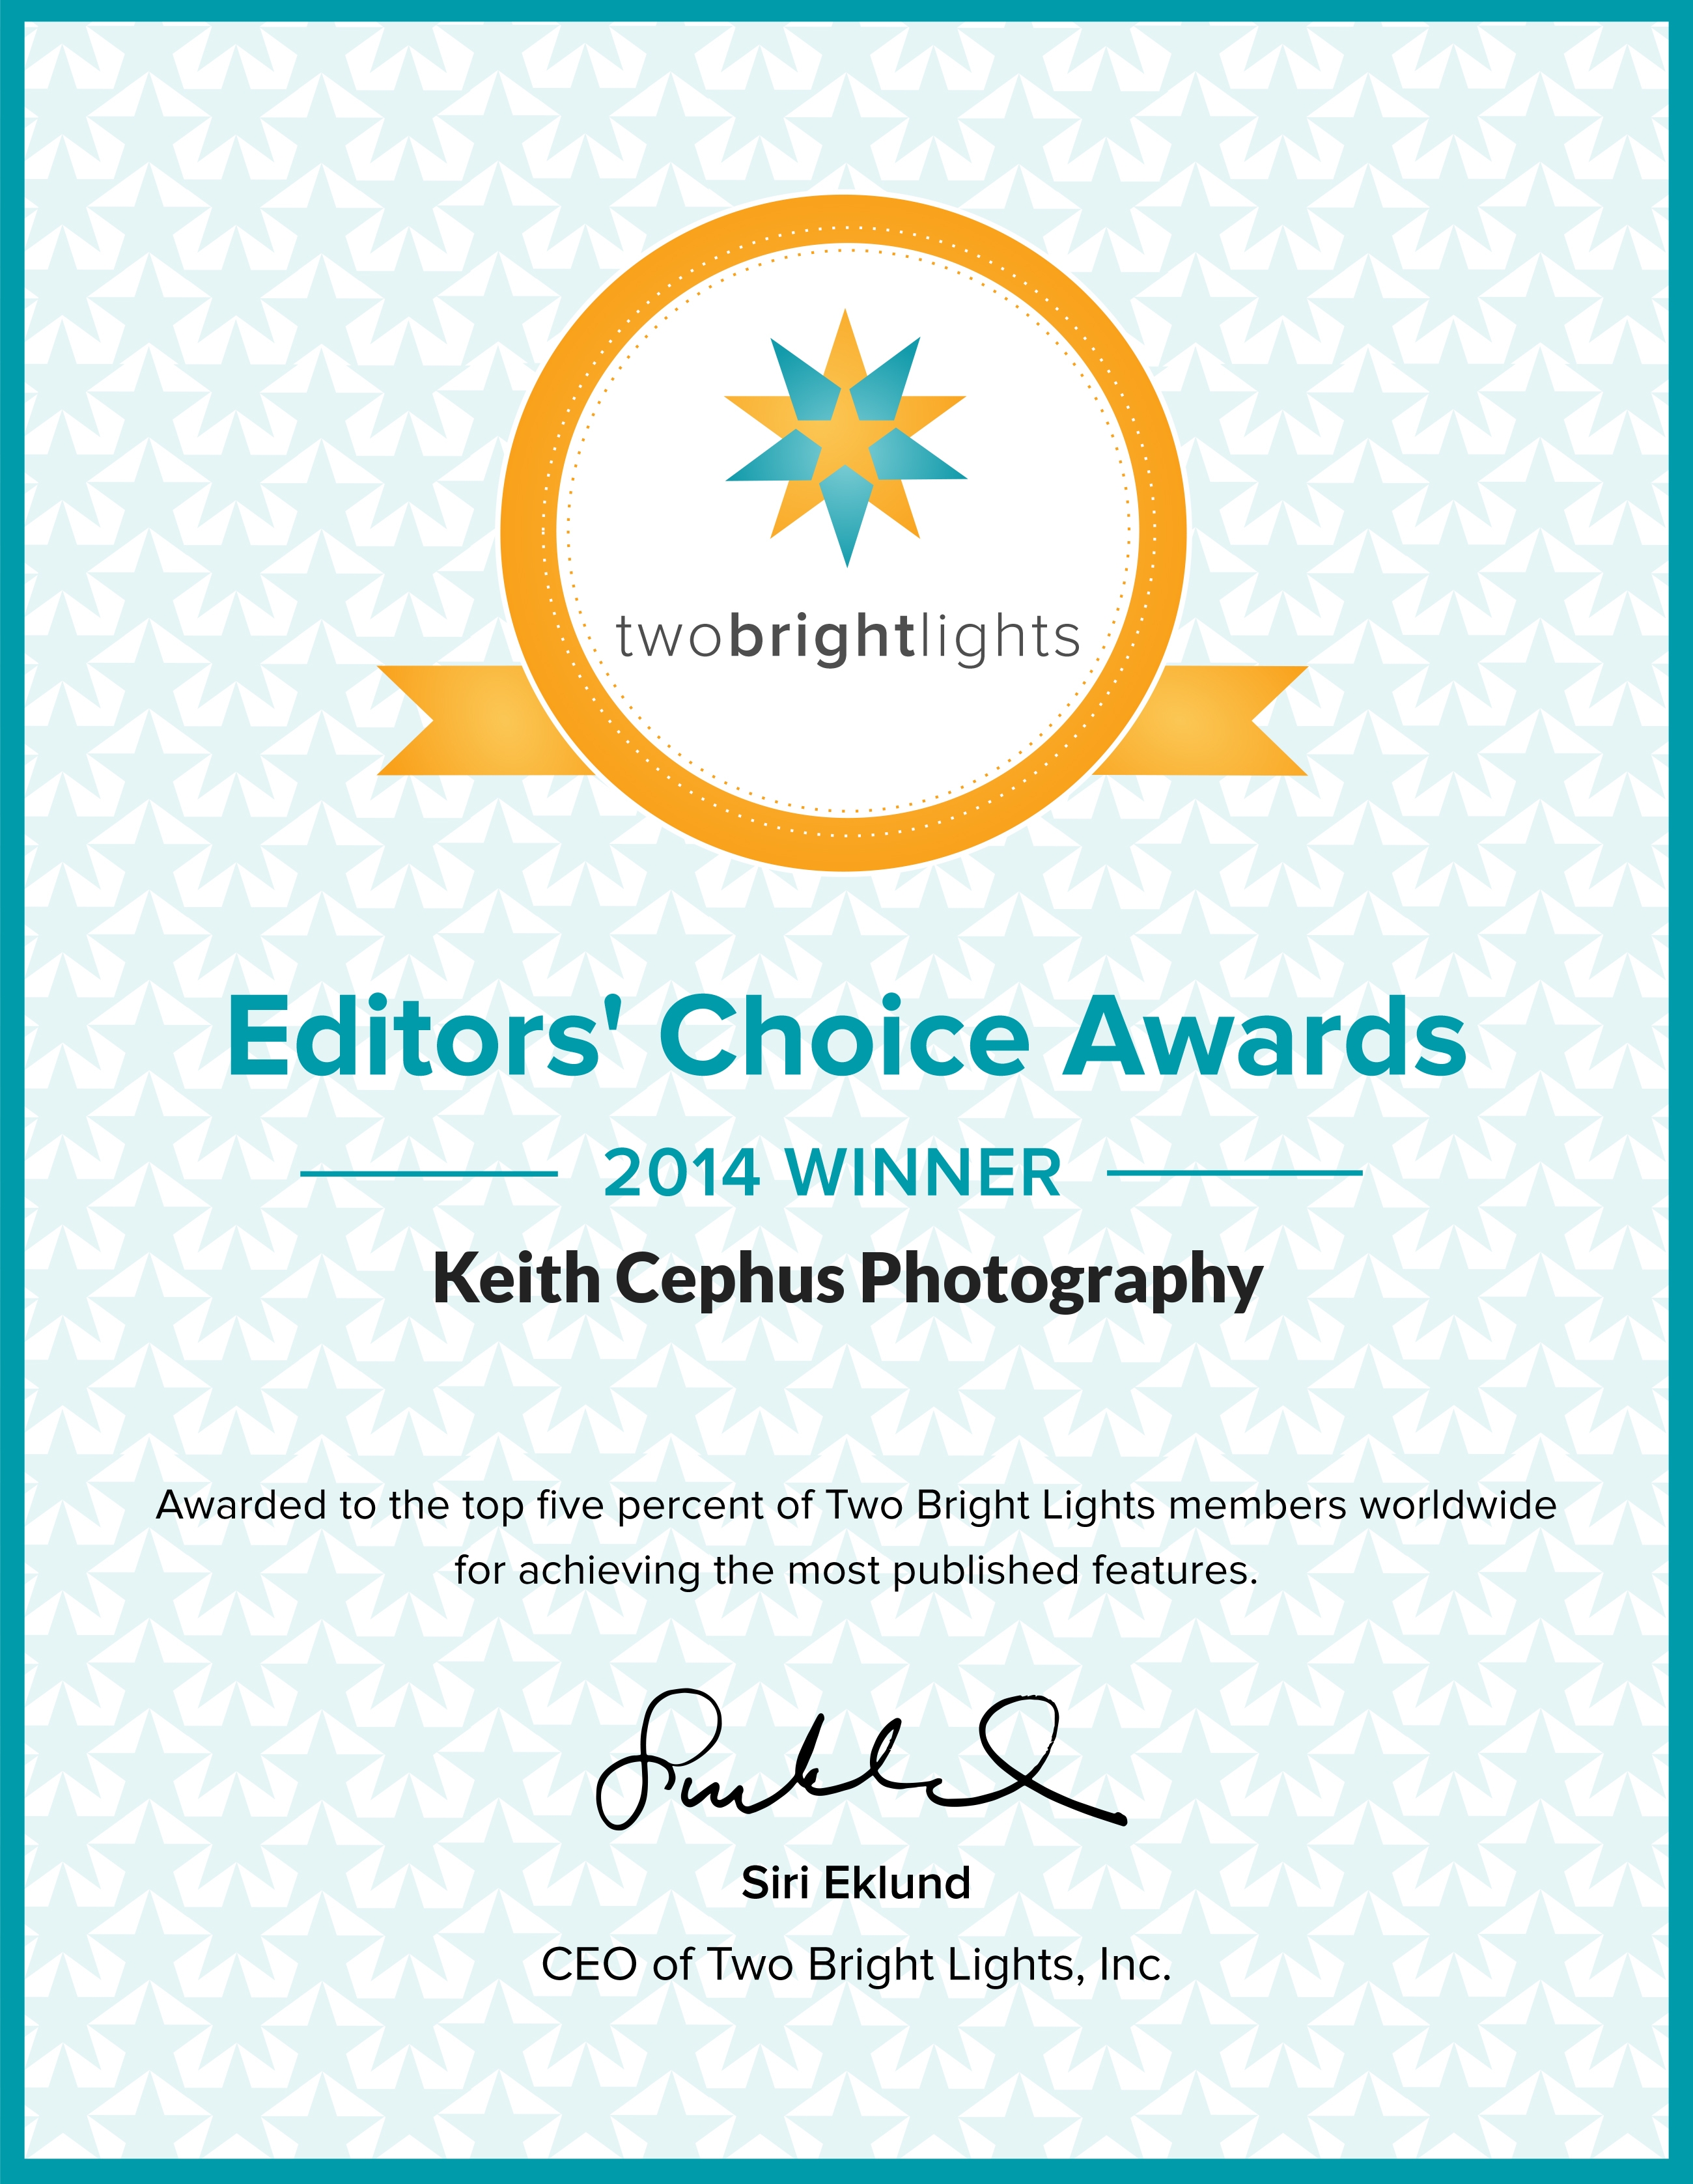 Cephus Receives Prestigious Award,  2014 Two Bright Lights Editors’ Choice Award!